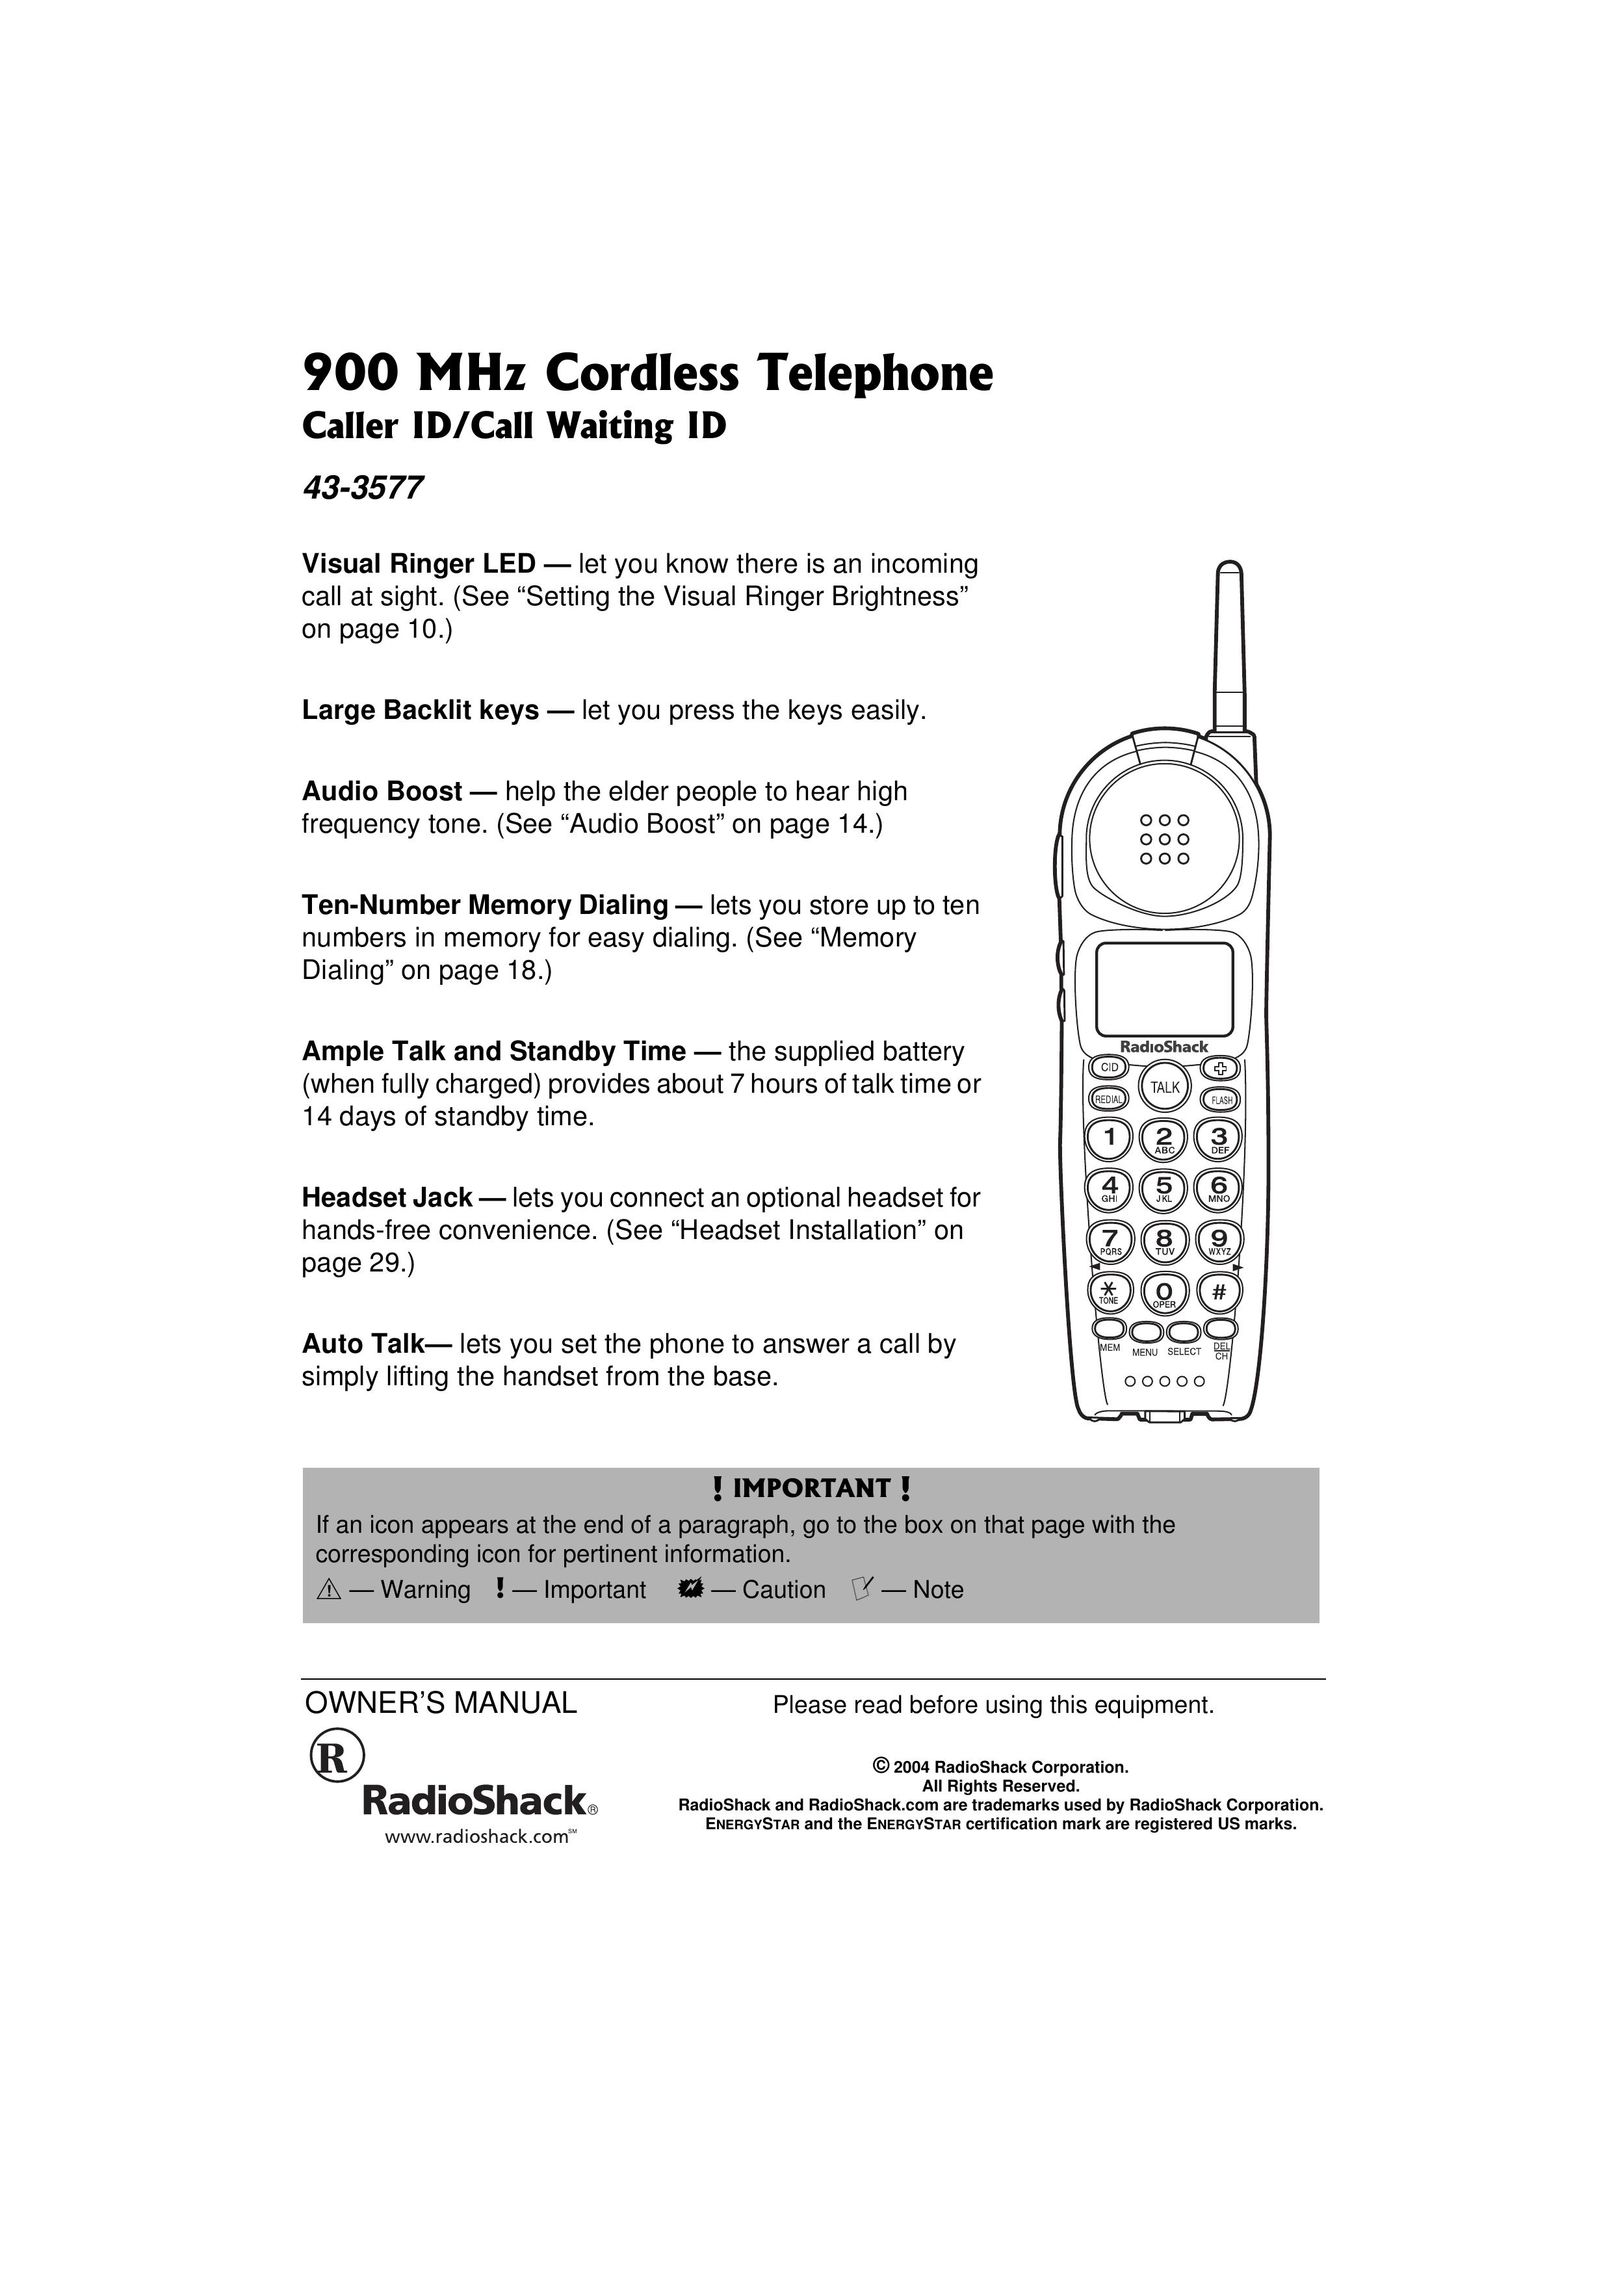 Radio Shack 43-3577 Cordless Telephone User Manual